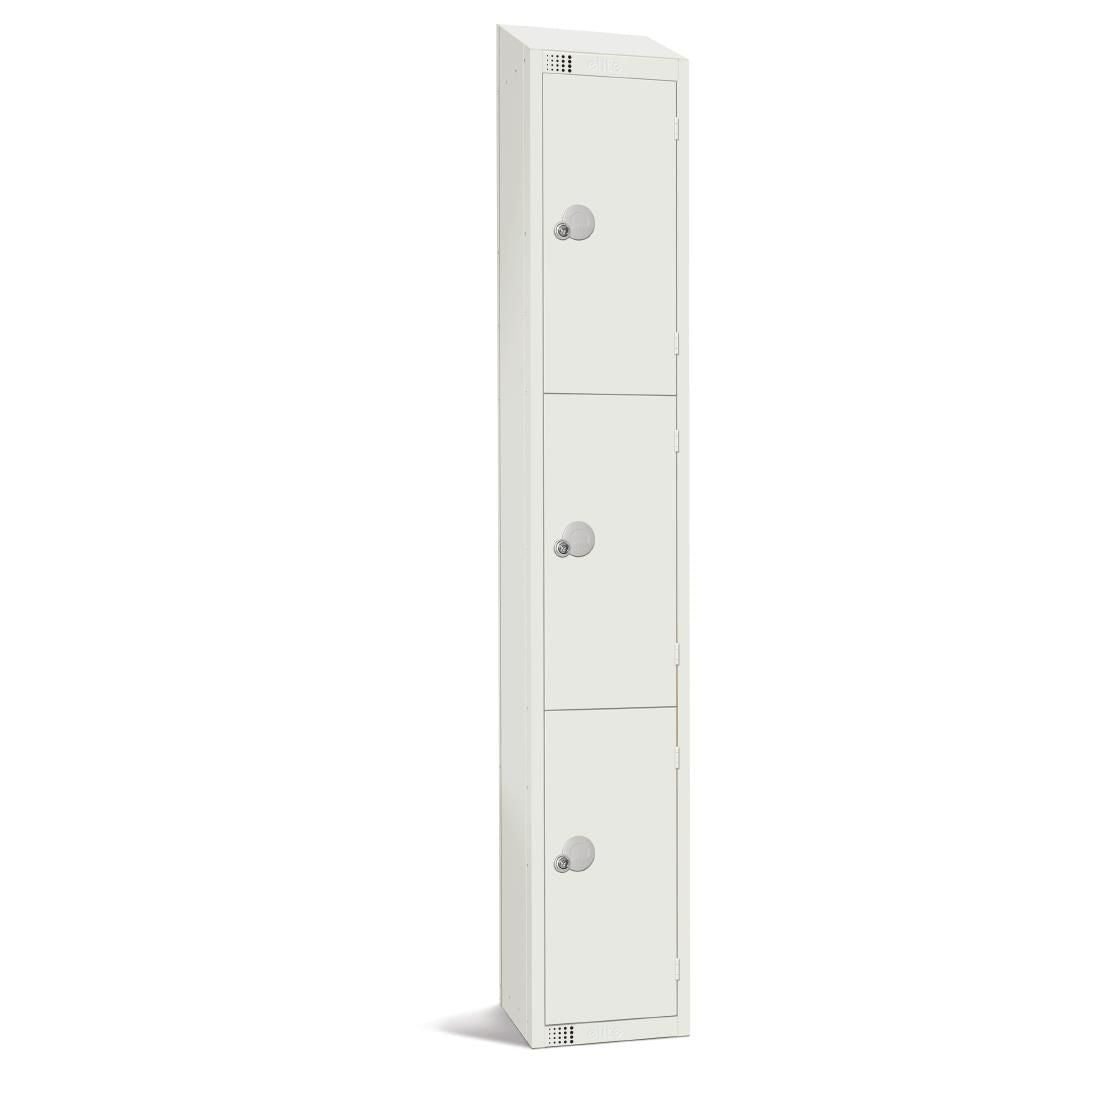 Elite Three Door Manual Combination Locker with Sloping Top JD Catering Equipment Solutions Ltd